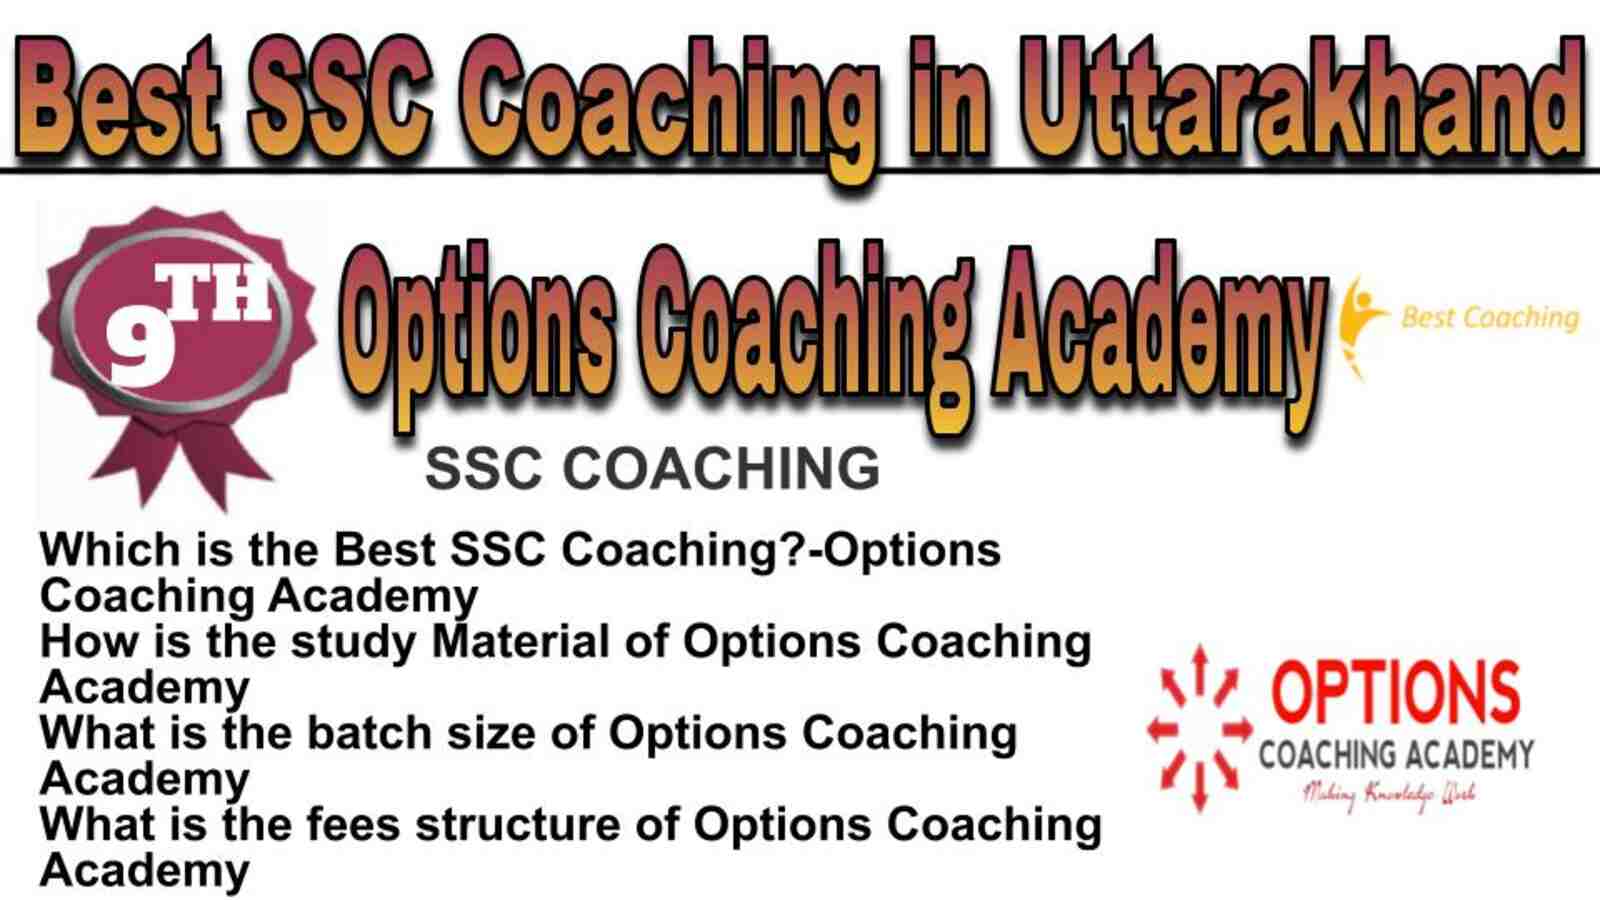 Rank 9 best SSC coaching in Uttarakhand